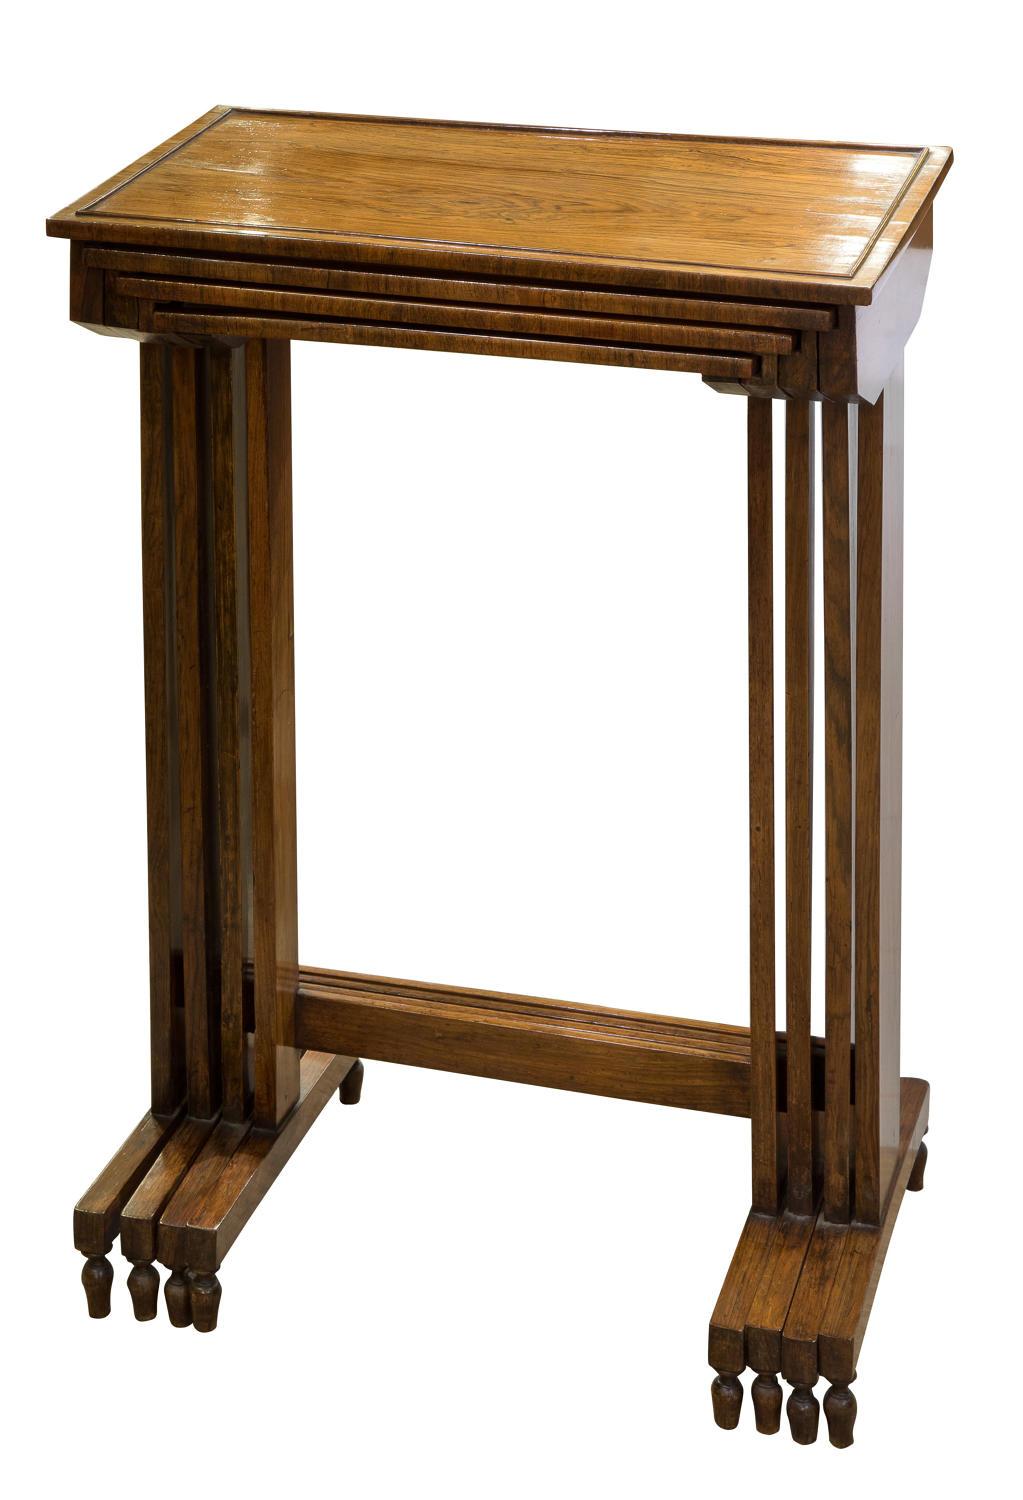 Regency rosewood set of quartetto tables of simple but elegant design.

circa 1820.